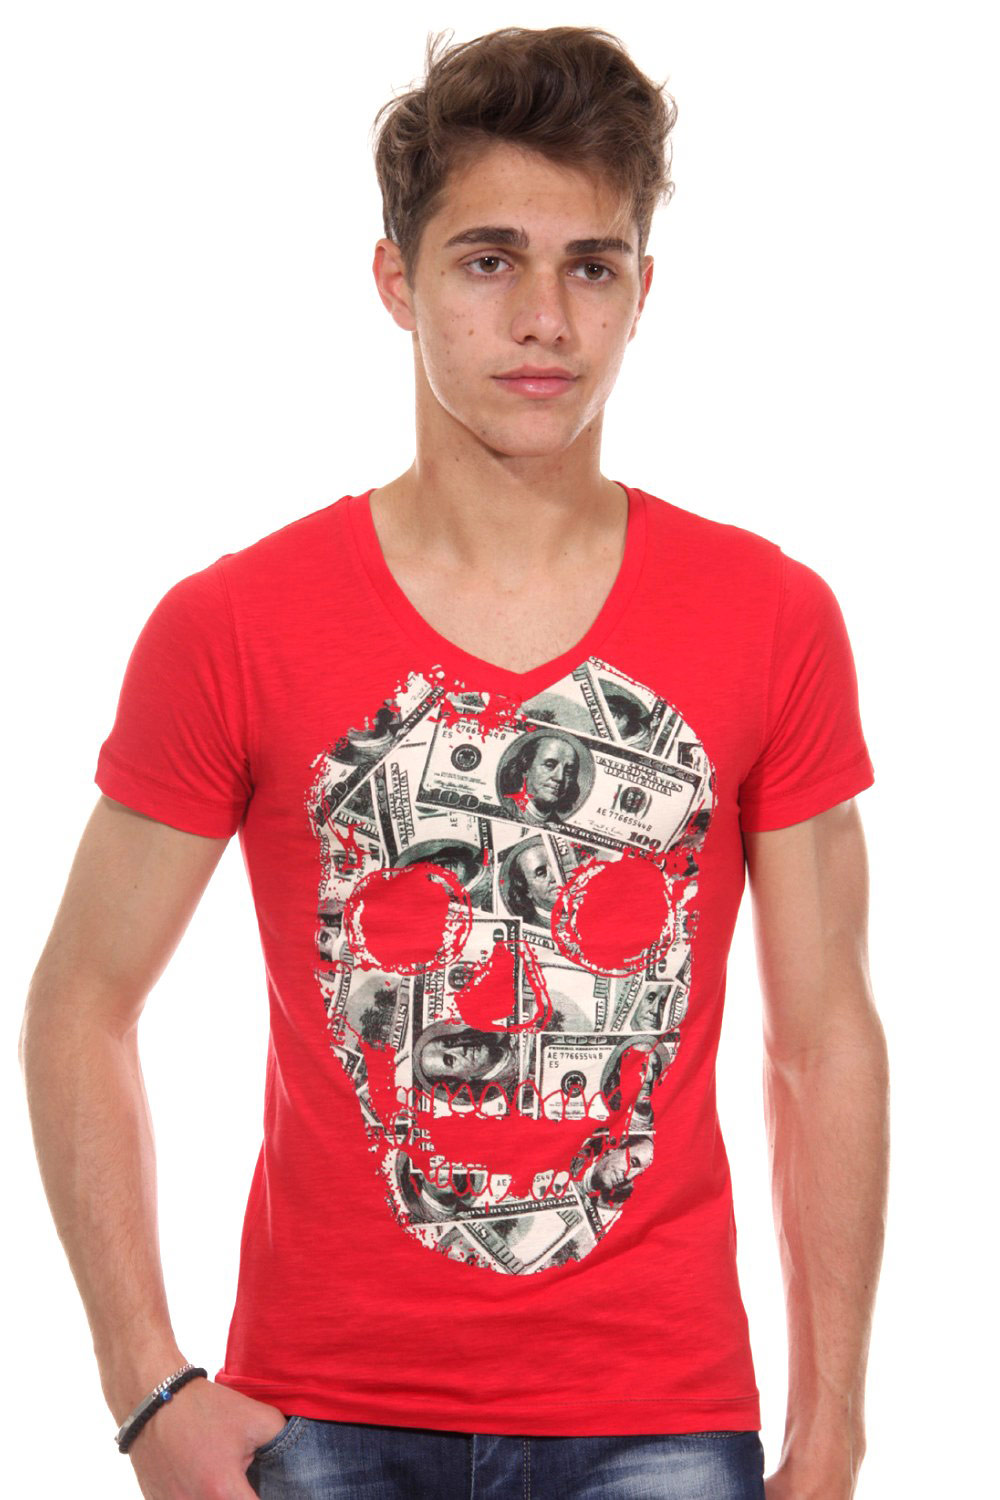 R-NEAL T-Shirt V-Ausschnitt slim fit auf oboy.de